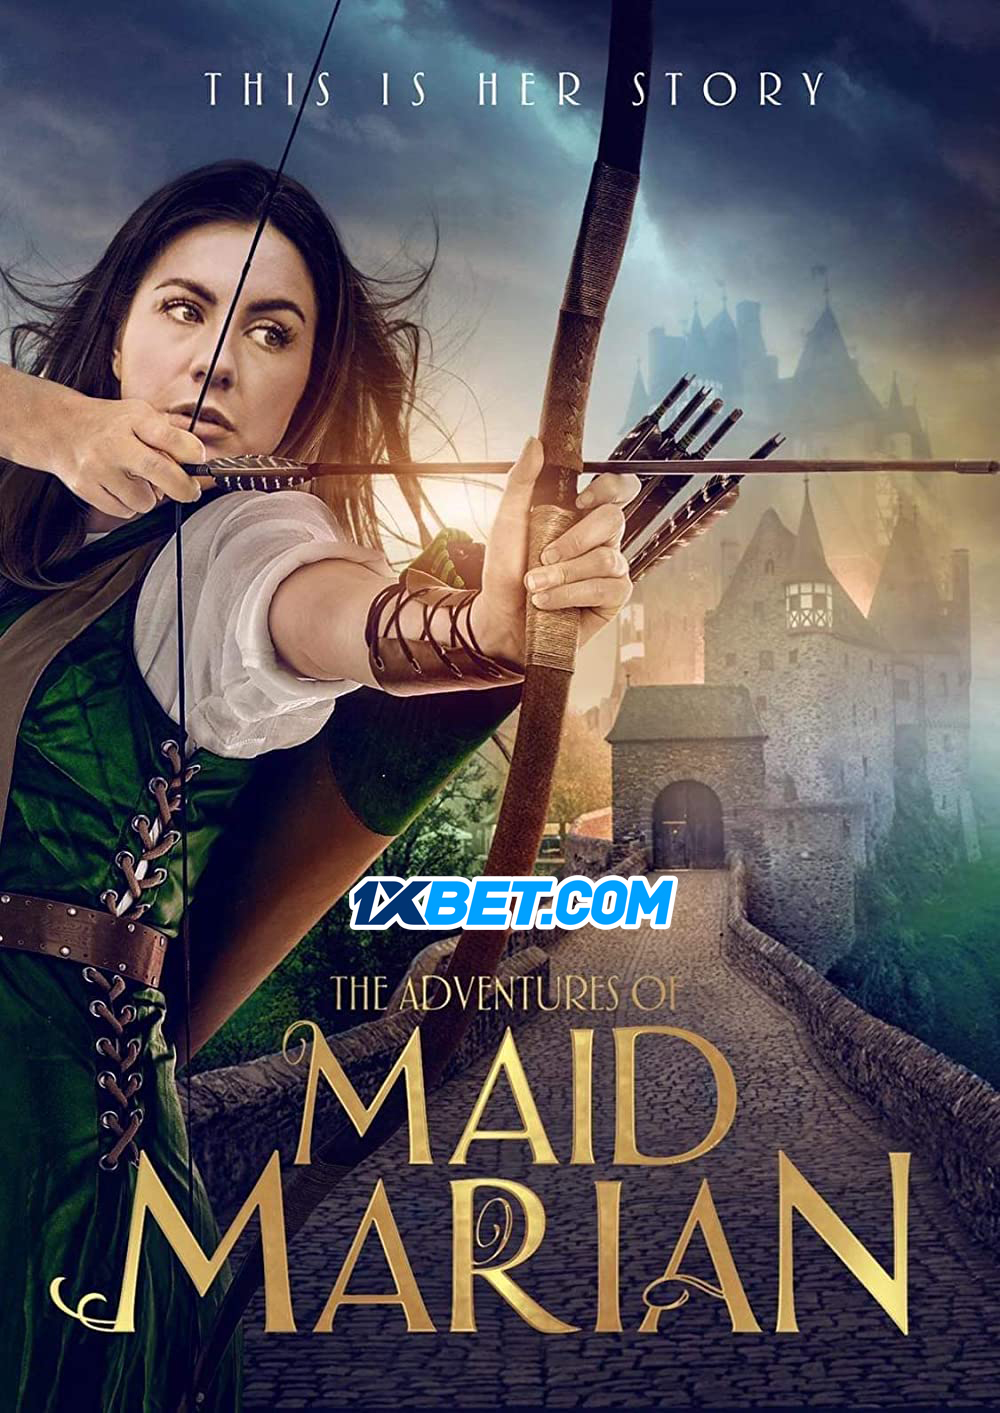 The Adventures of Maid Marian (2022) Bengali Dubbed (VO) [1XBET] 720p WEBRip Online Stream